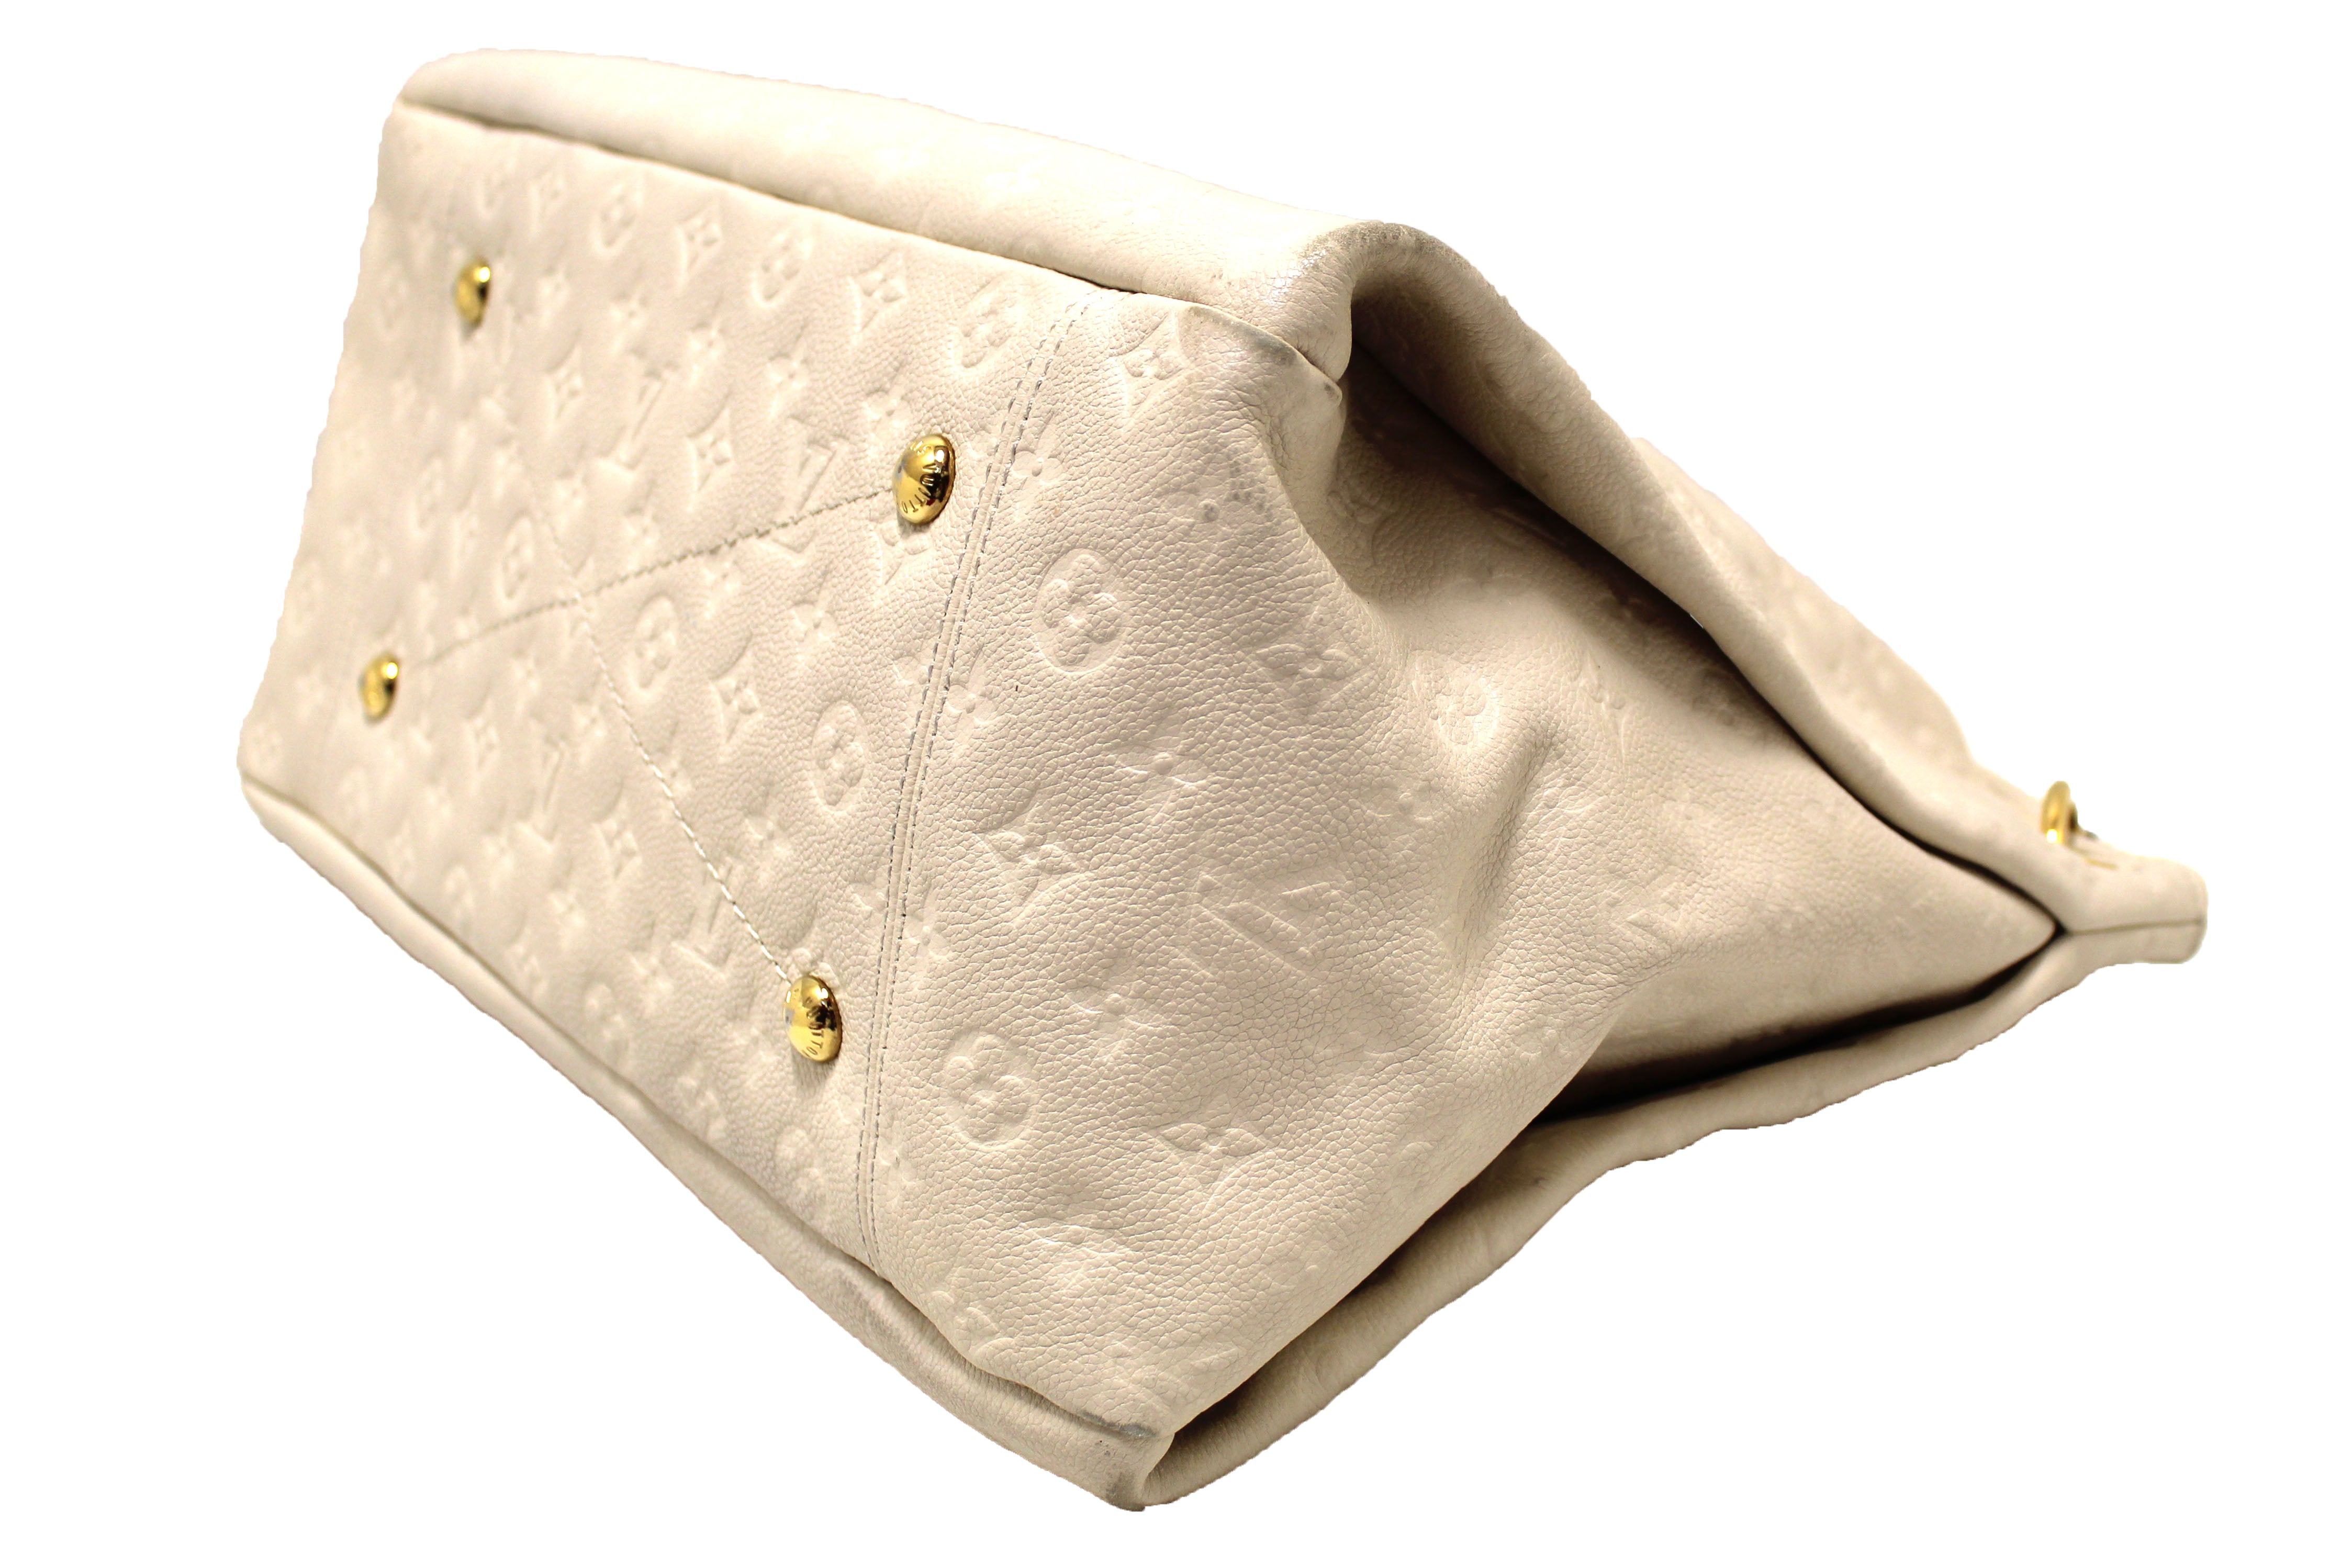 Authentic Louis Vuitton White Monogram Empreinte Leather Artsy MM Shoulder Tote Bag